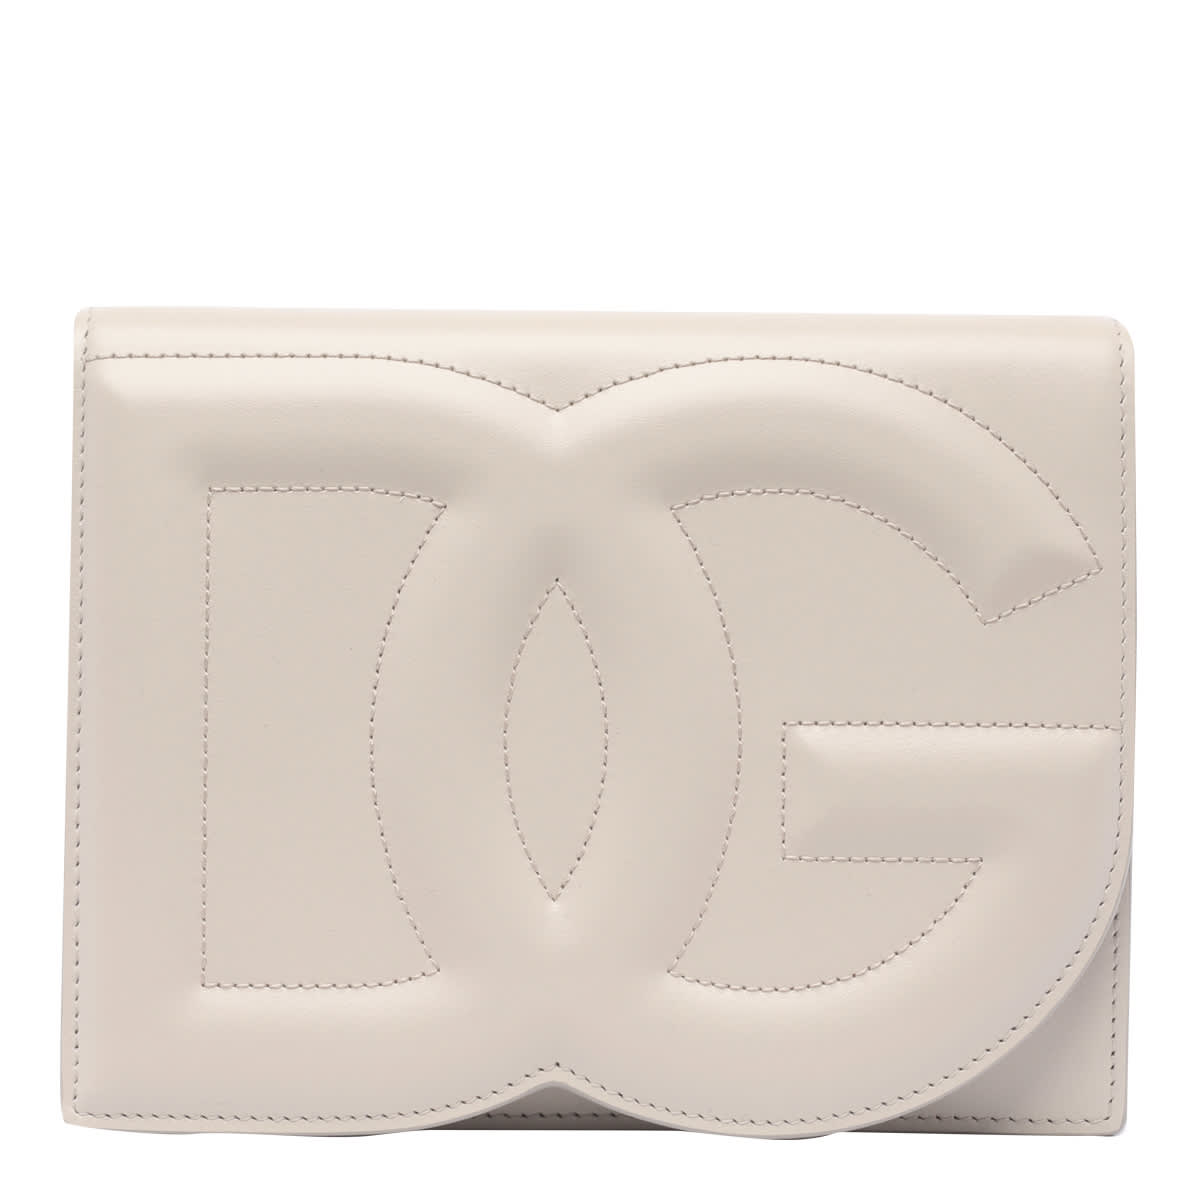 Dolce & Gabbana Dg Logo Crossbody Bag In White